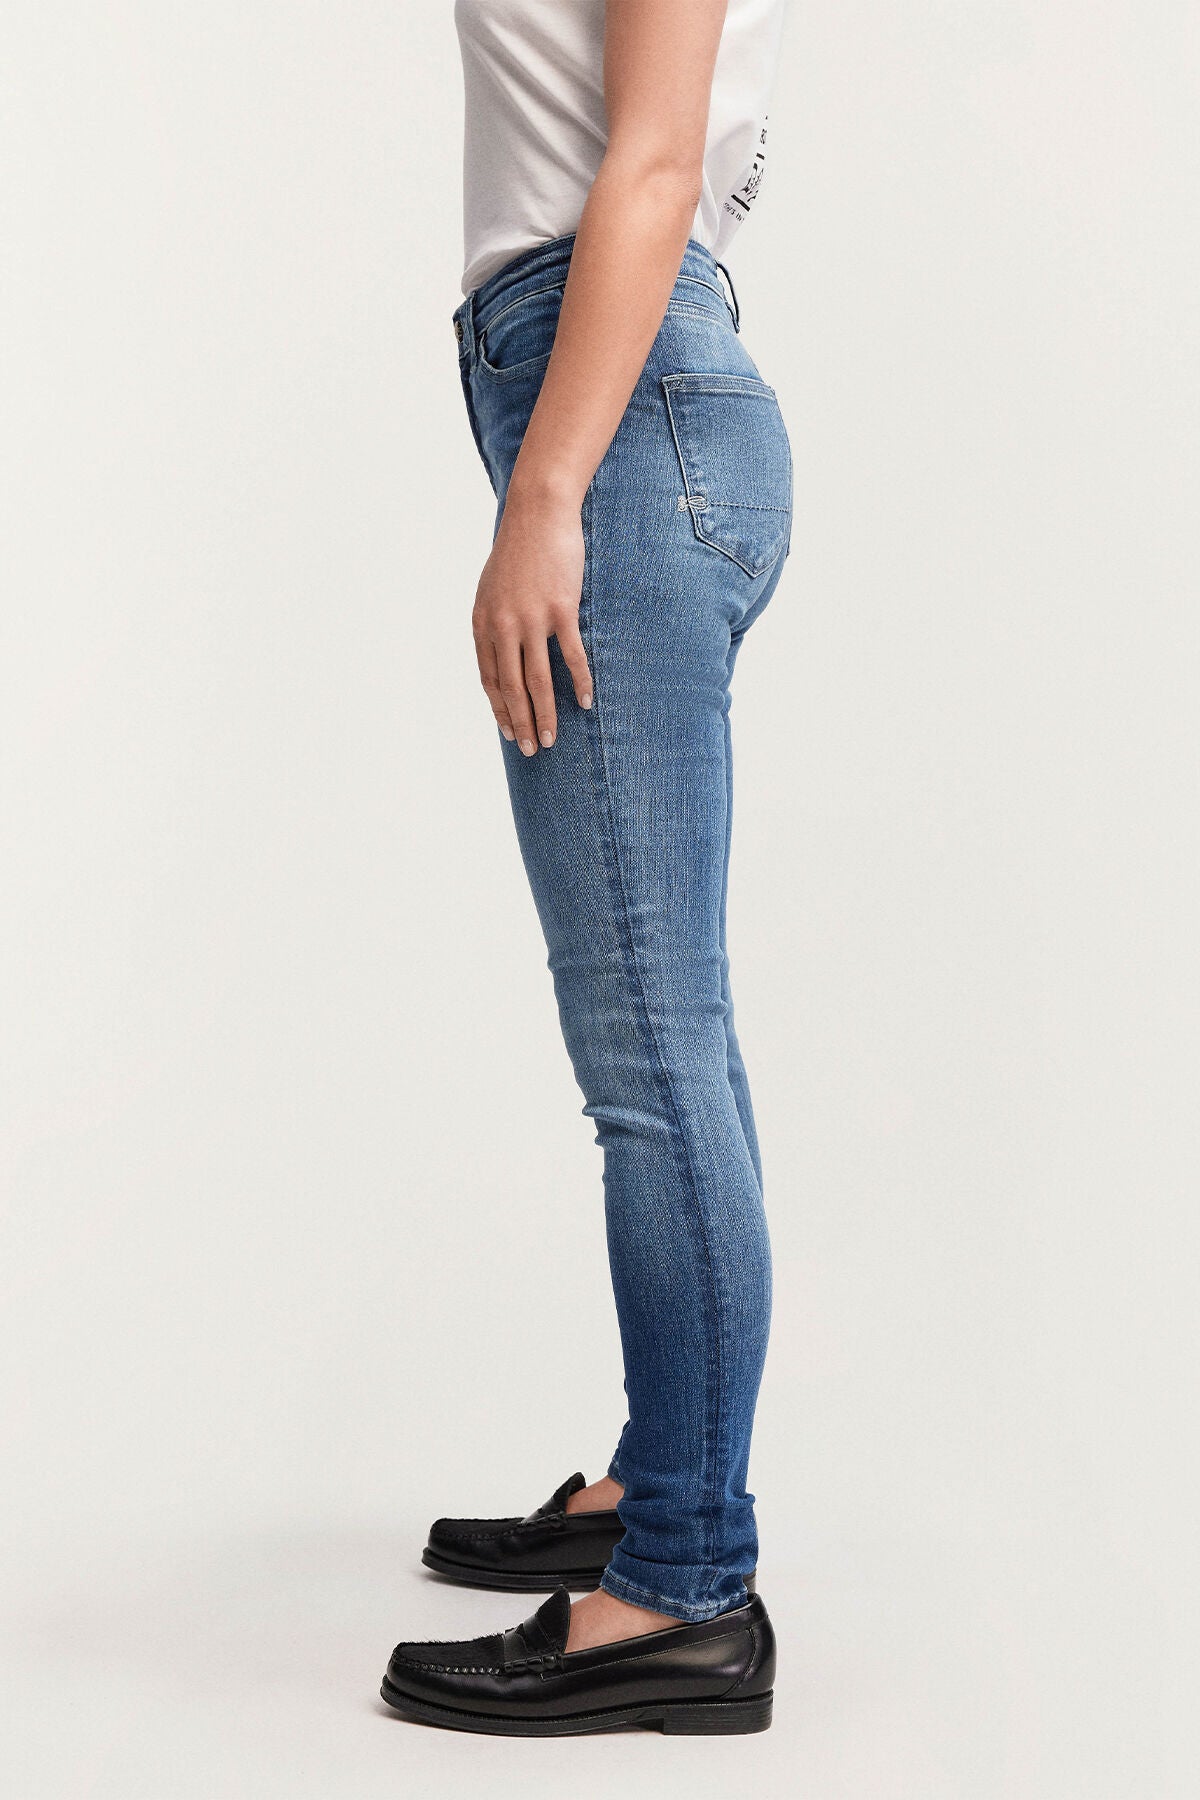 The back view of a woman wearing Denham's NEEDLE Skinny - Light Indigo denim jeans.